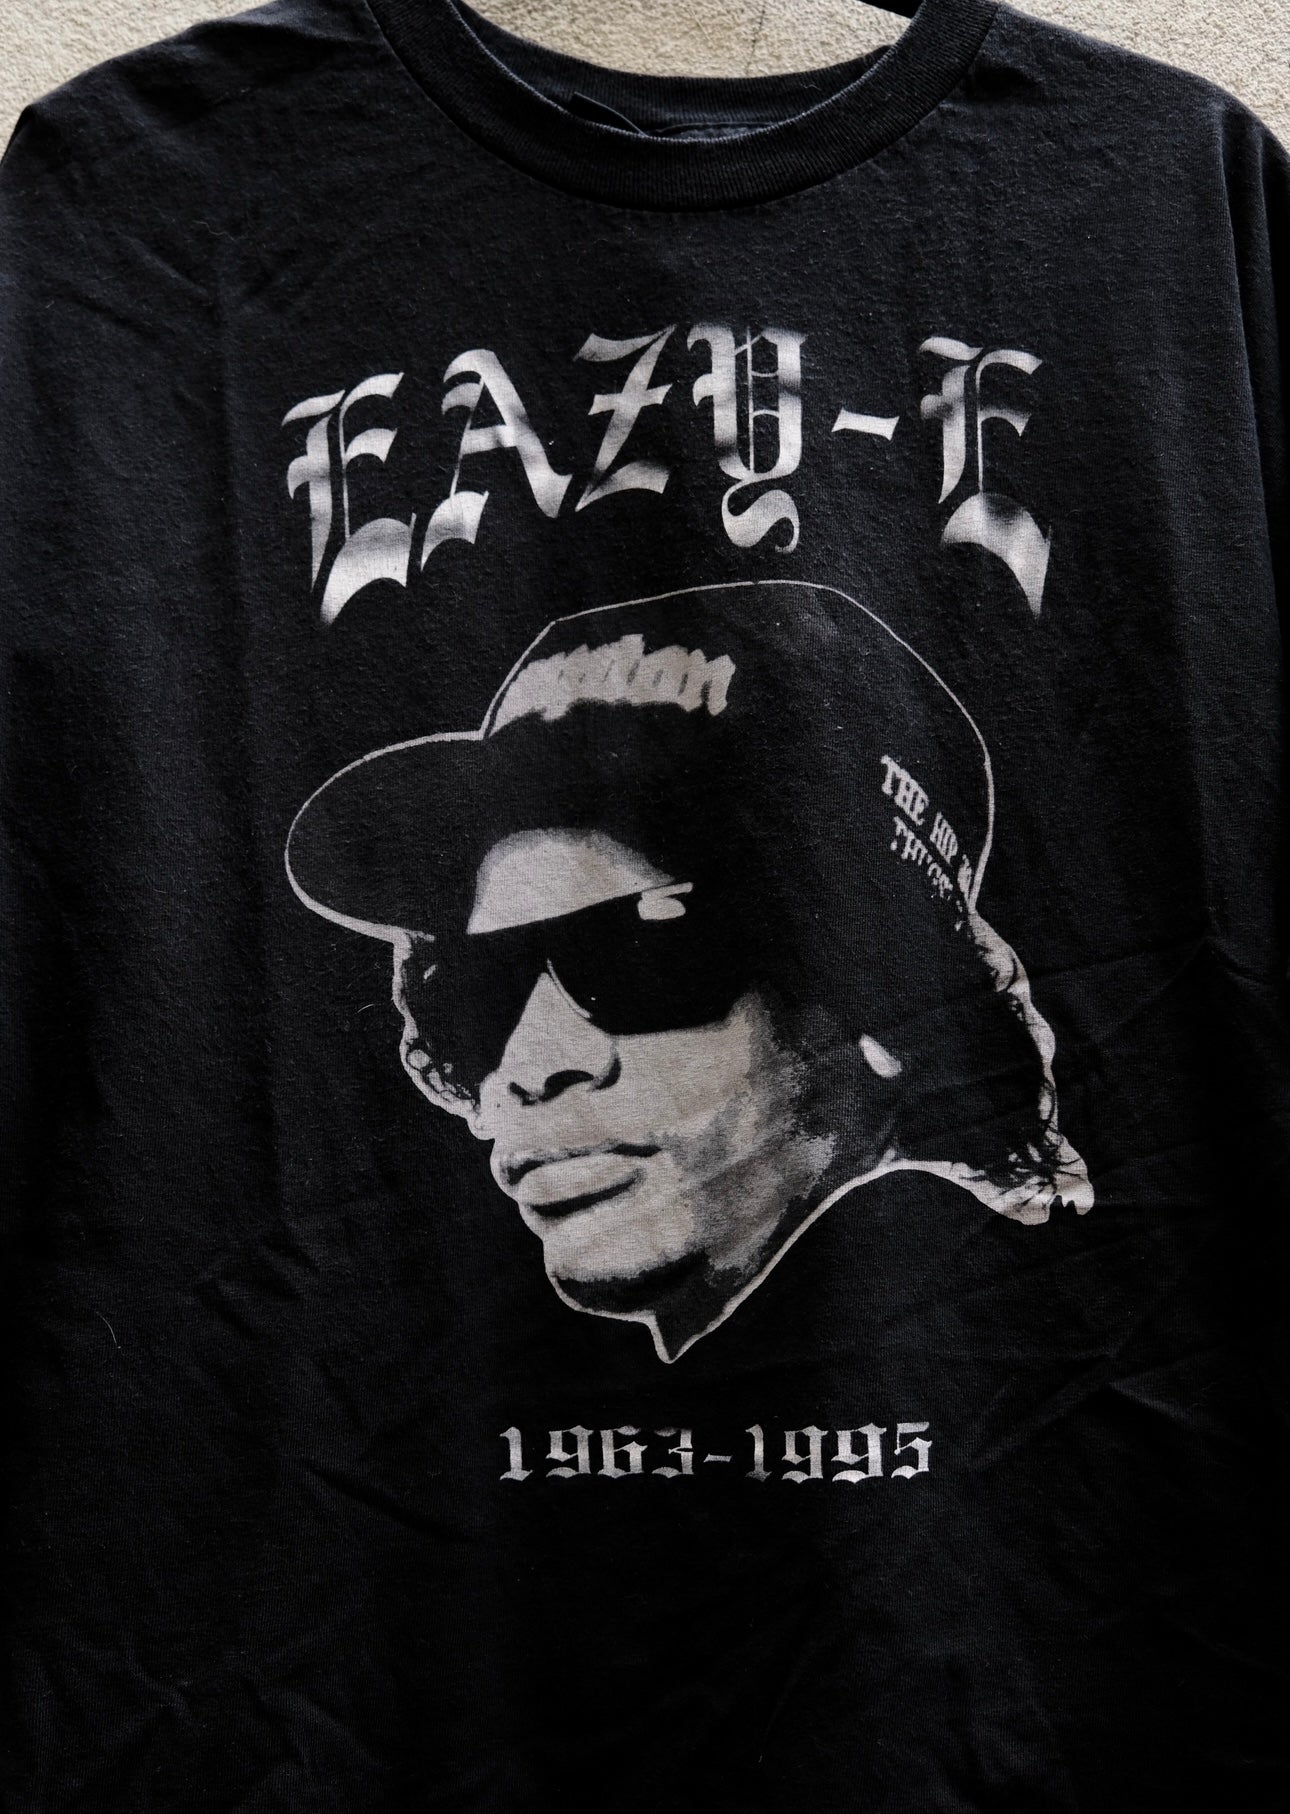 Eazy-E Ruthless Records